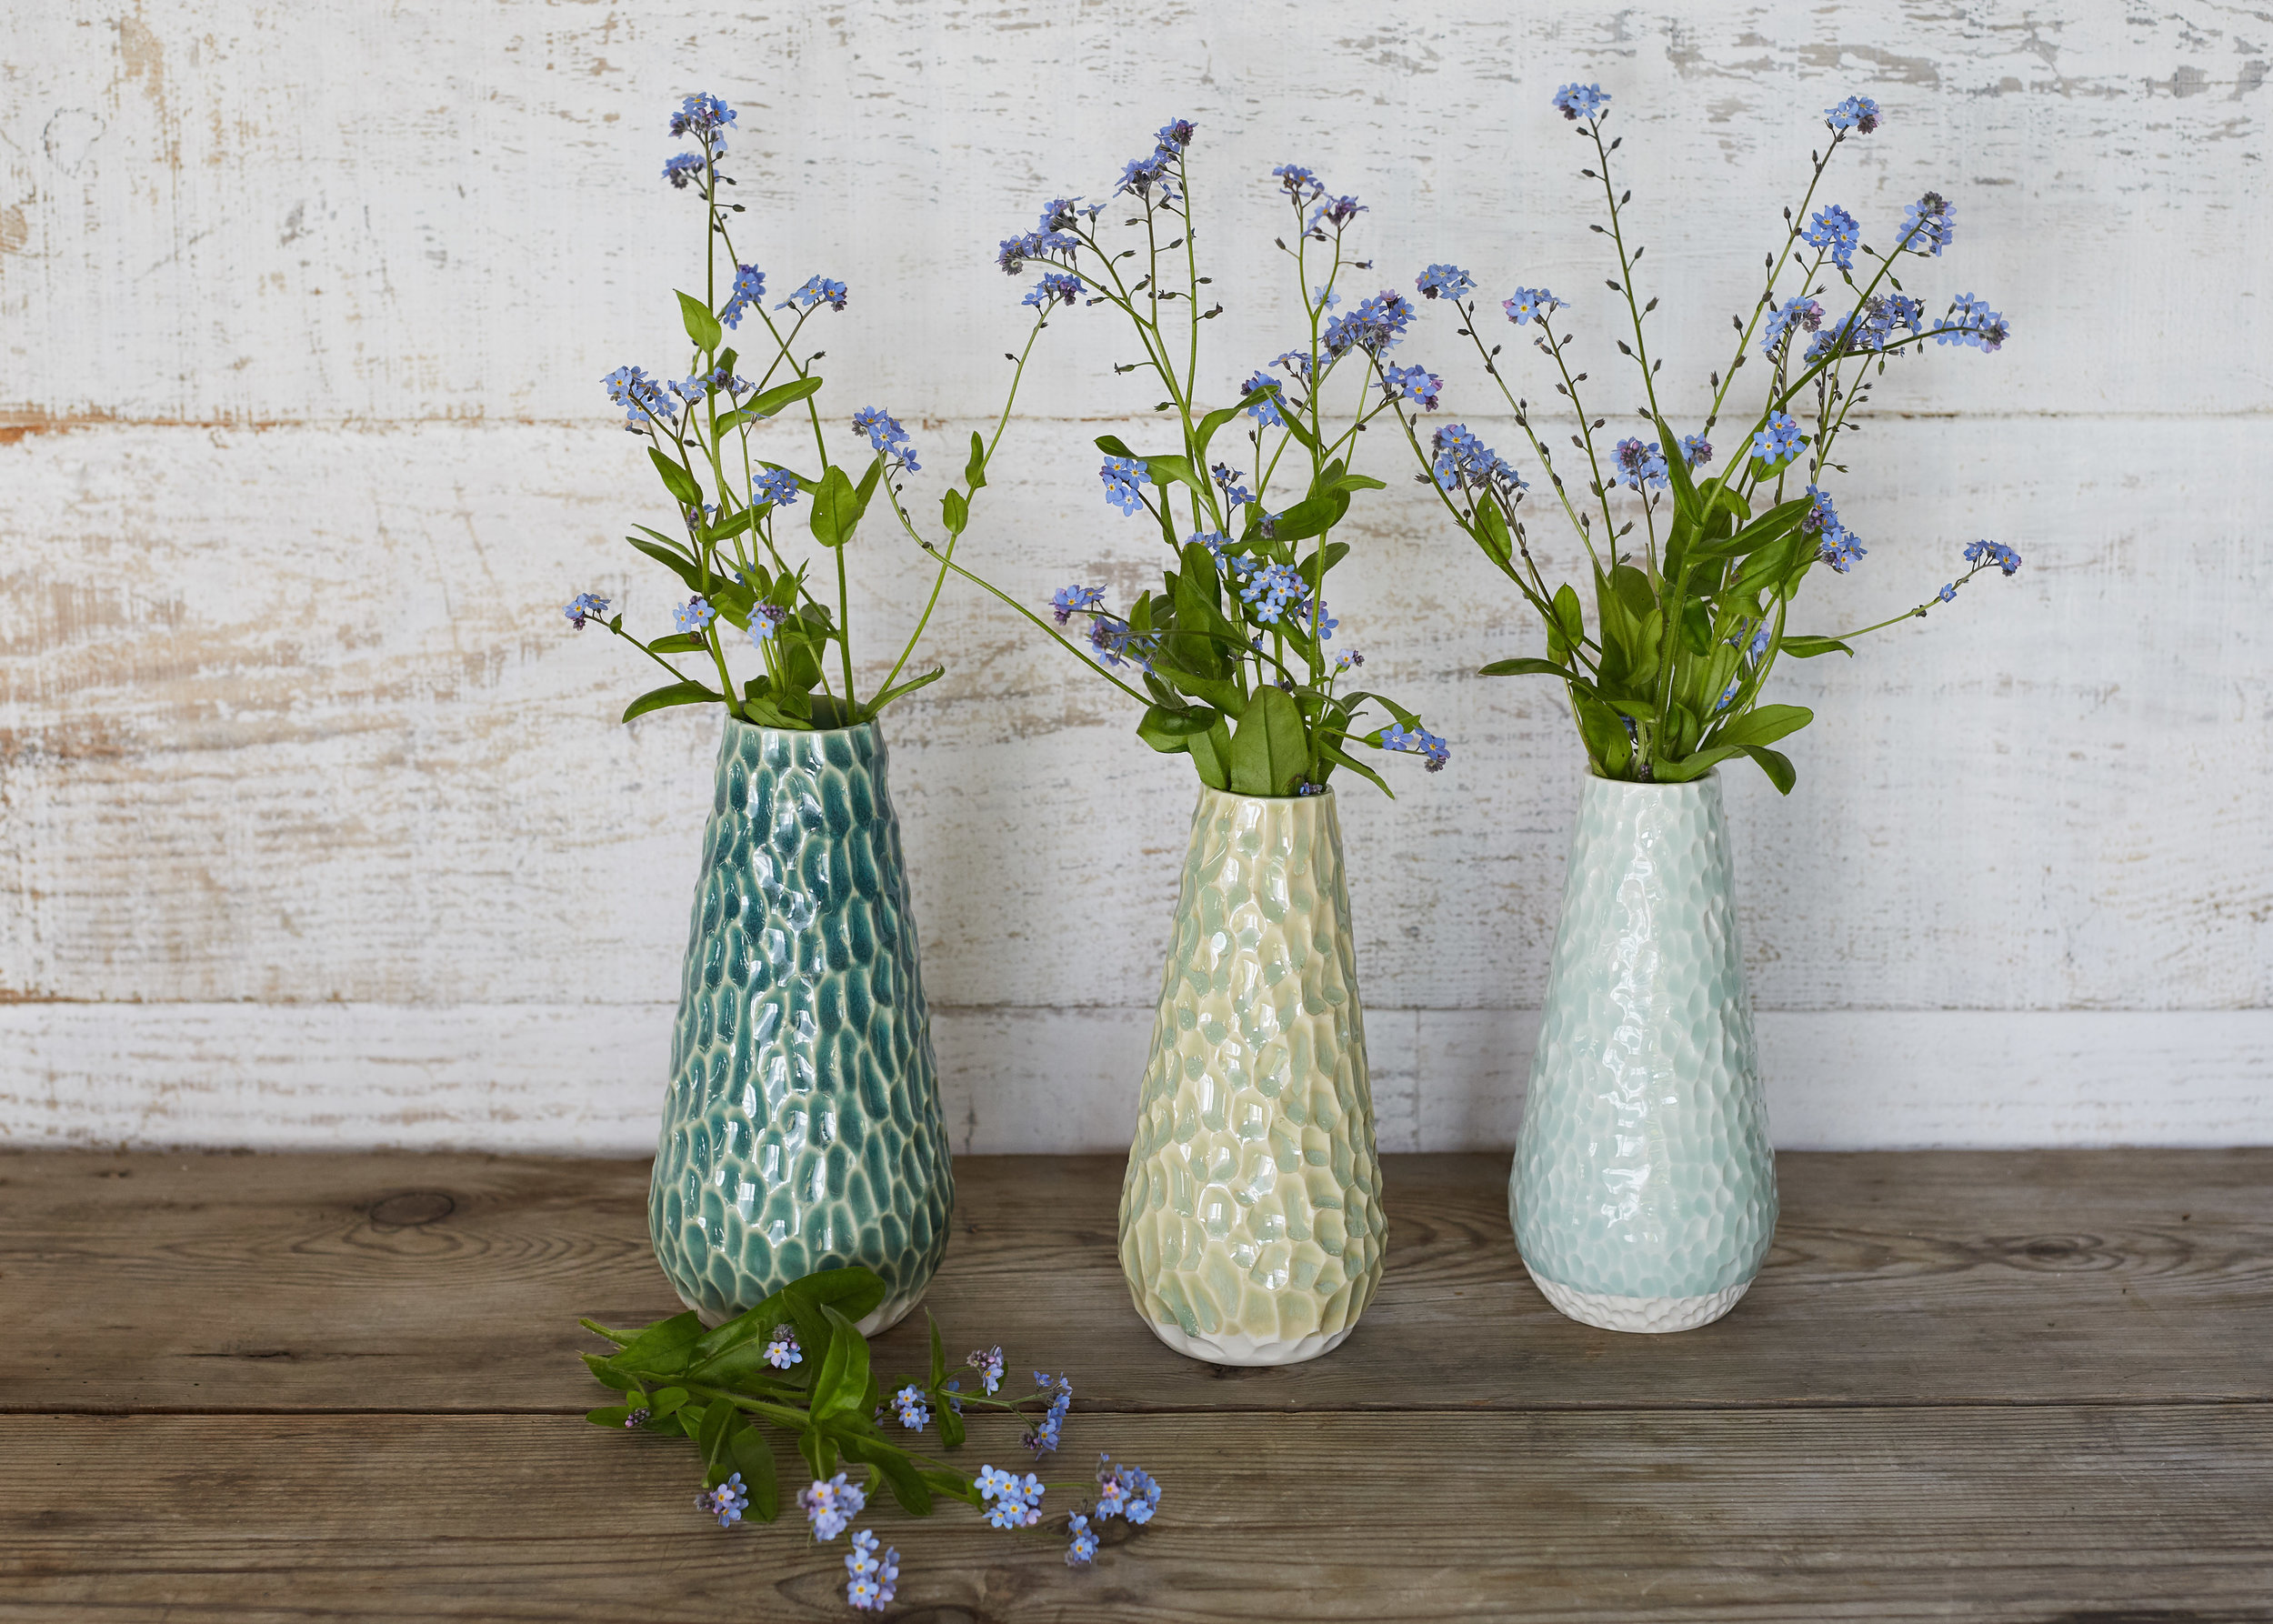 Clara-Castner-porcelain vased vases photo by Yeshen Venema.jpg